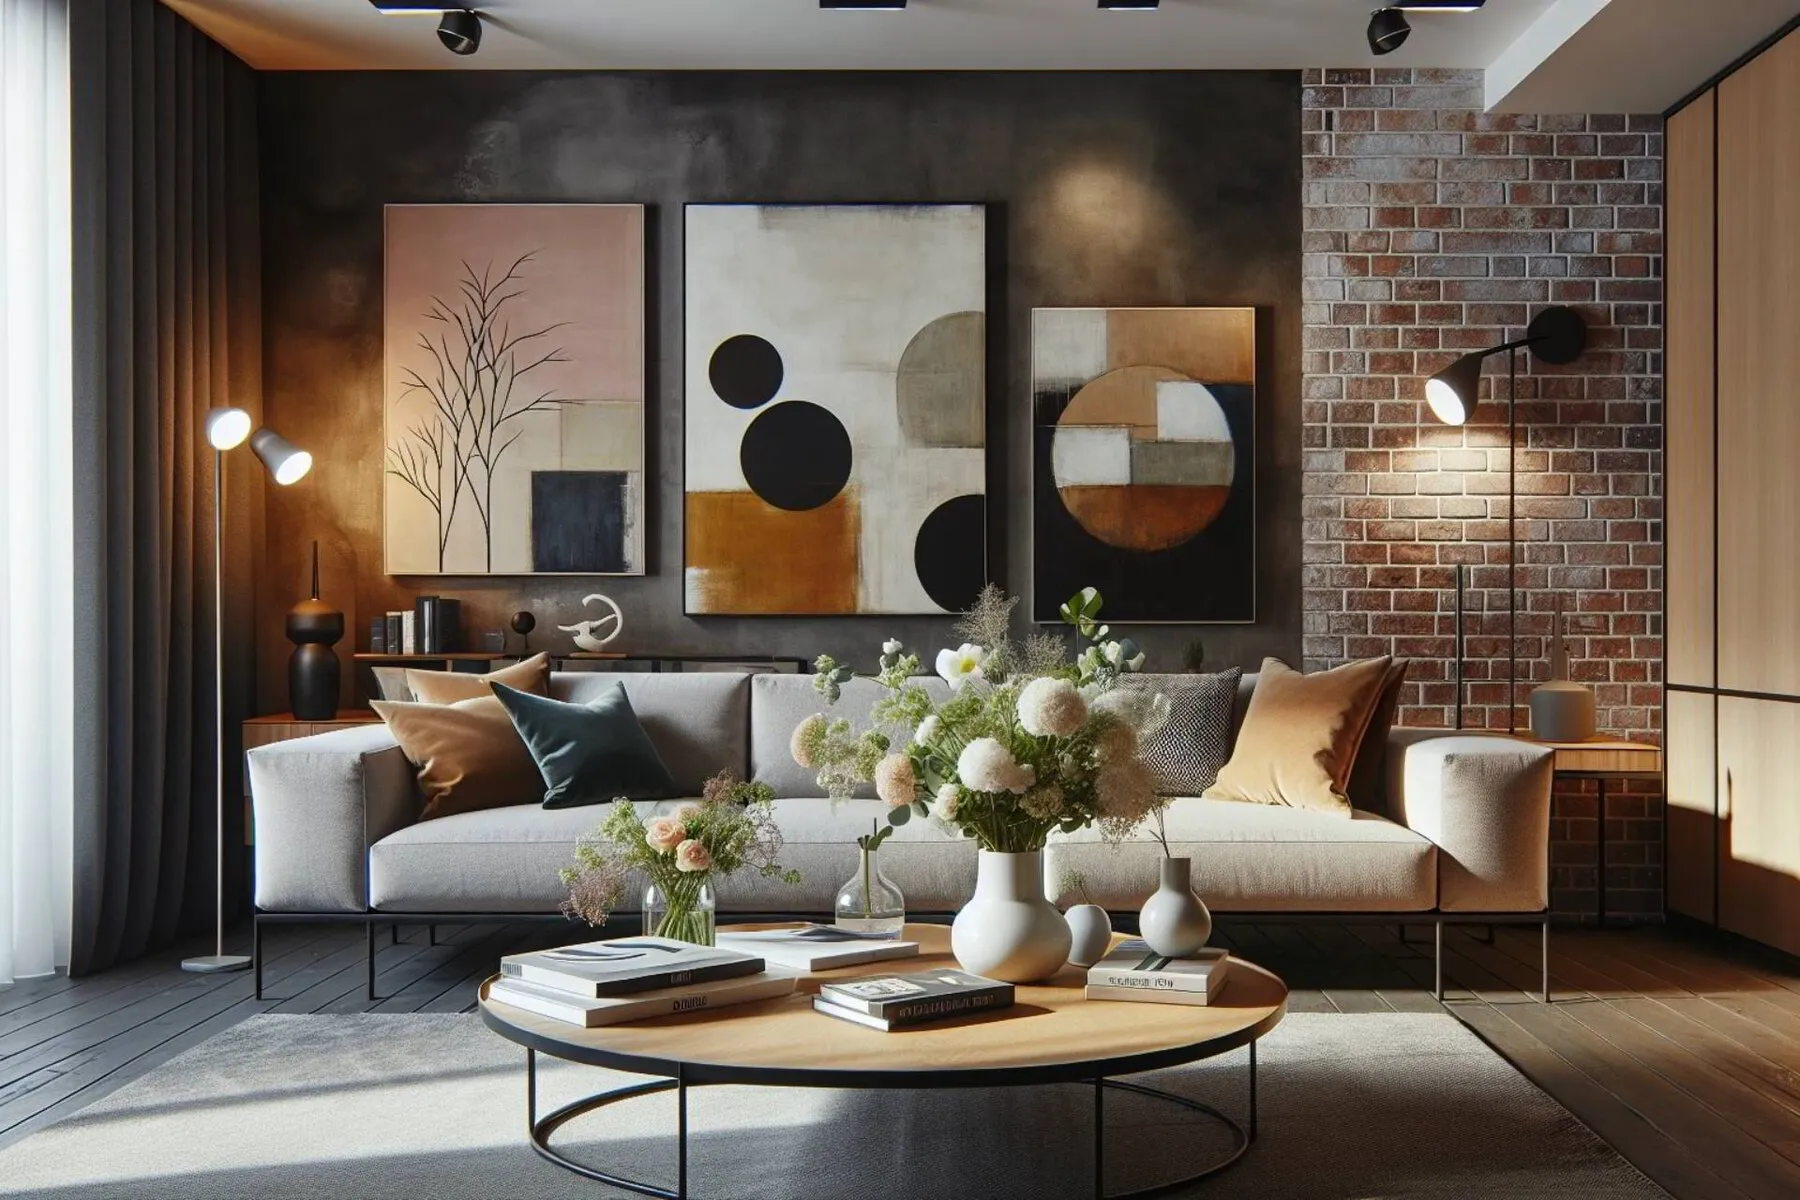 A well interior designed living room